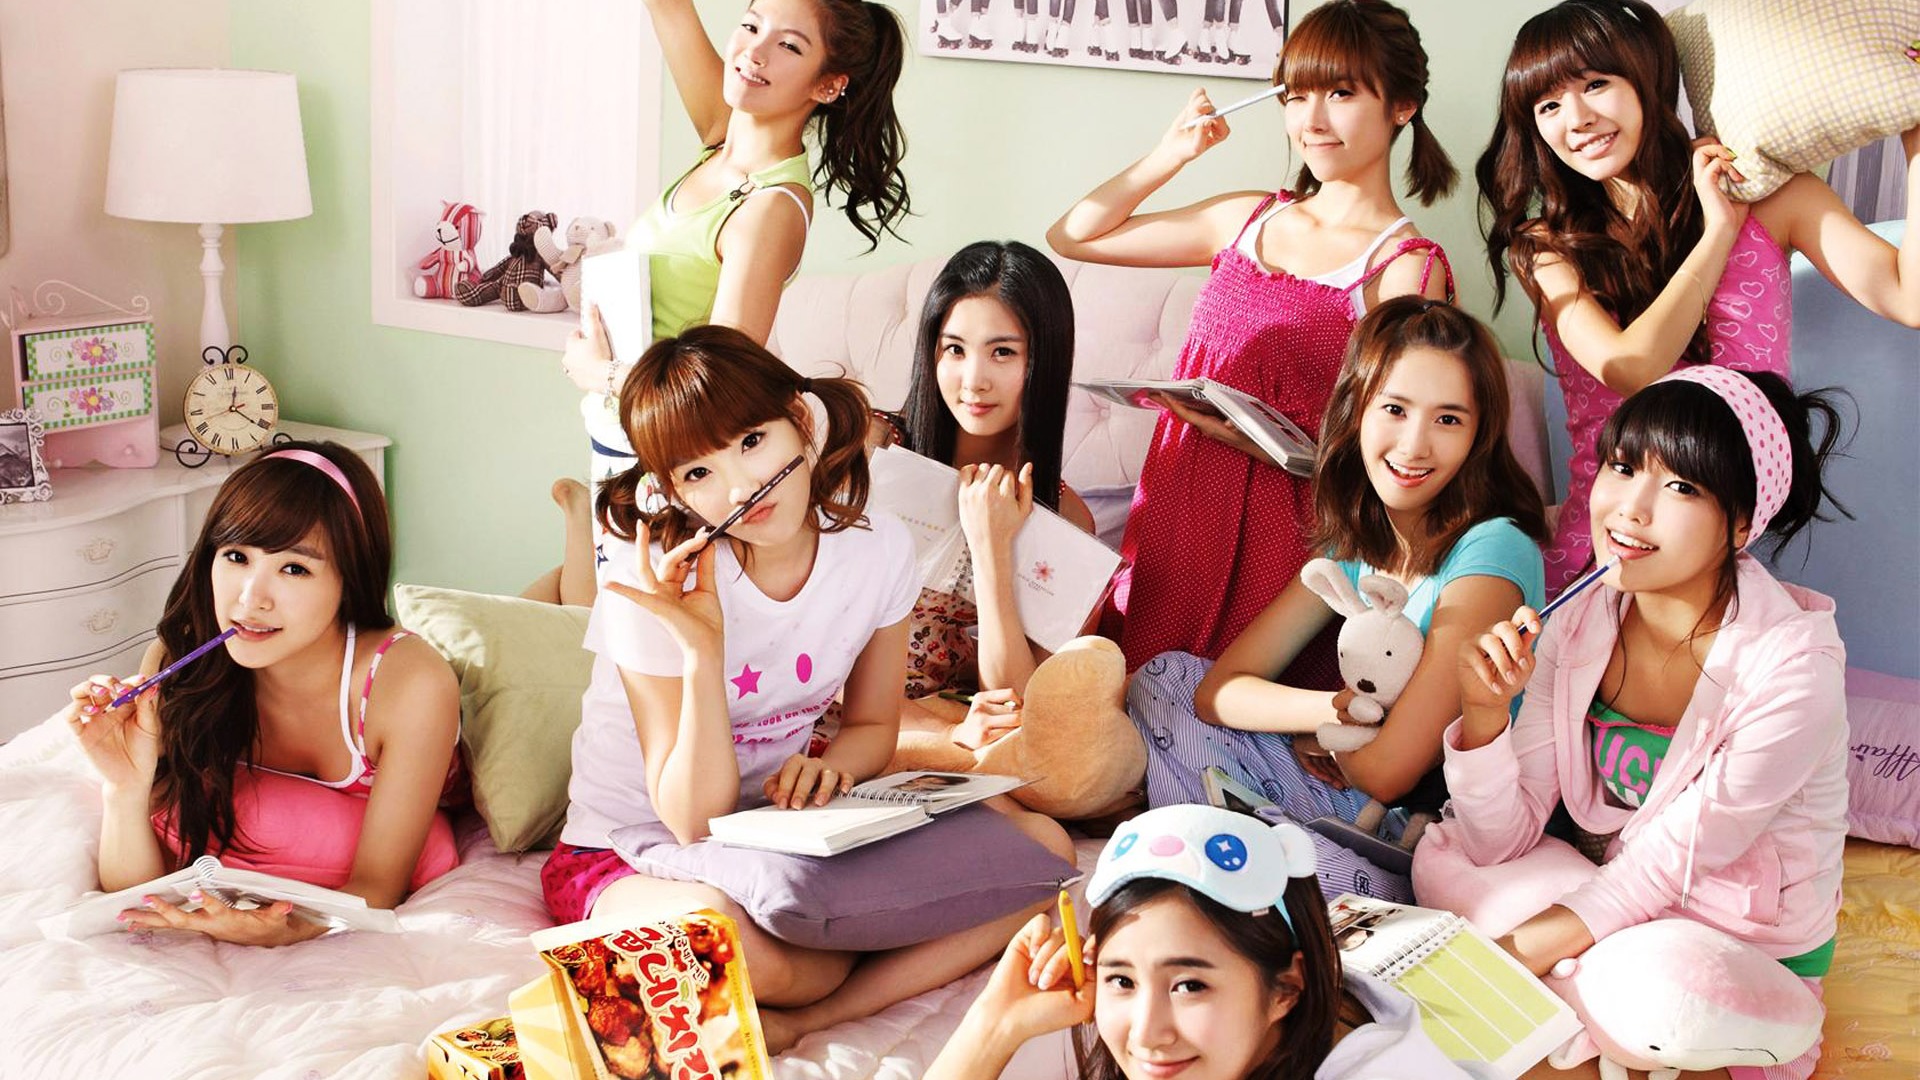 Girls Generation Wallpaper 2 1 1920x1080 Wallpaper Download Girls Generation Wallpaper 2 People Wallpapers V3 Wallpaper Site